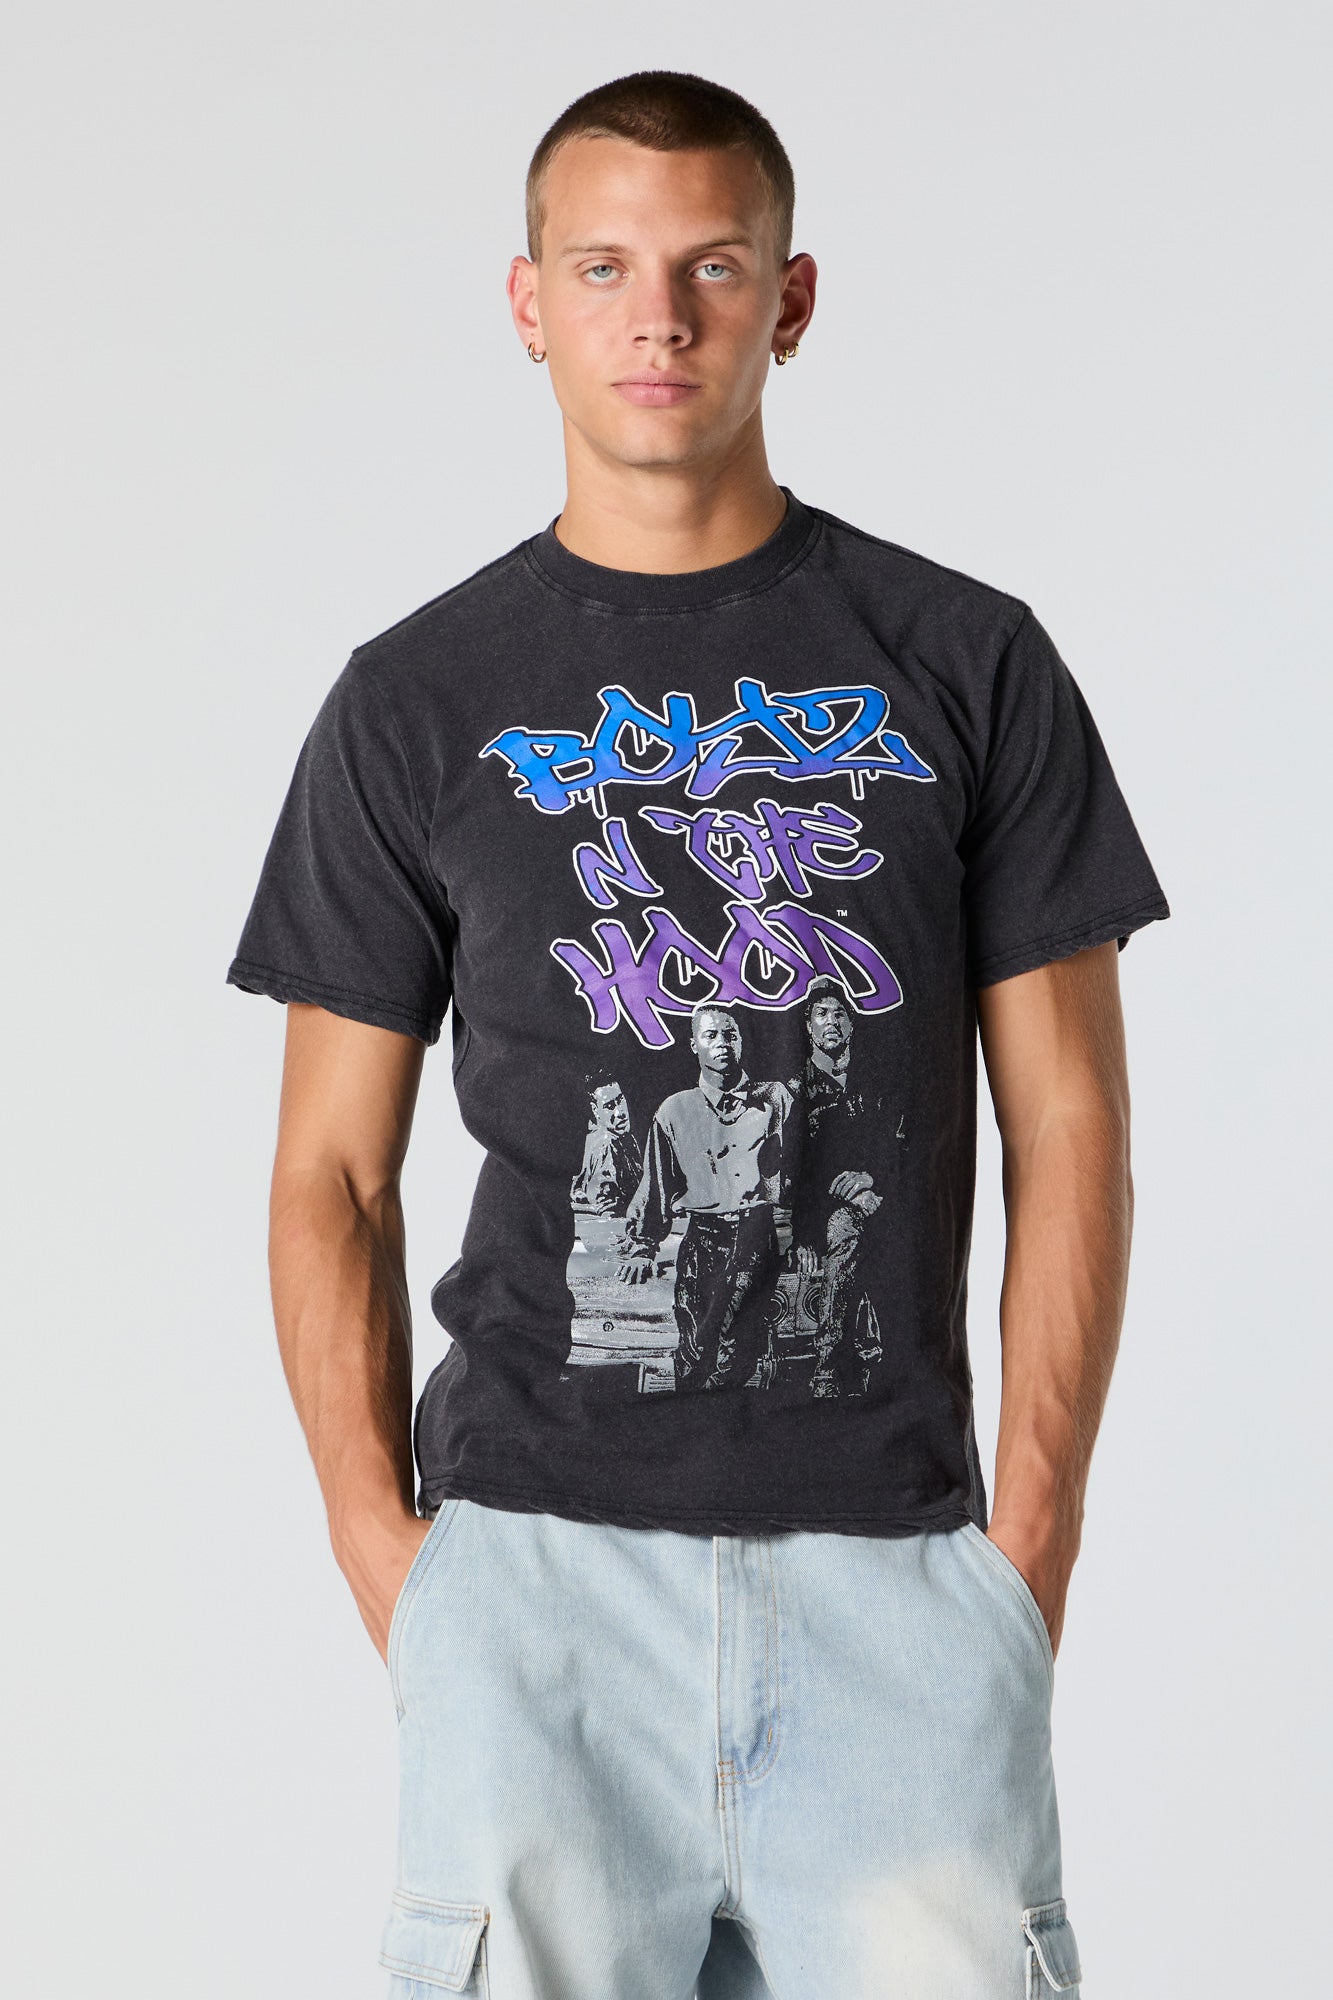 Boyz n the Hood Graphic T-Shirt